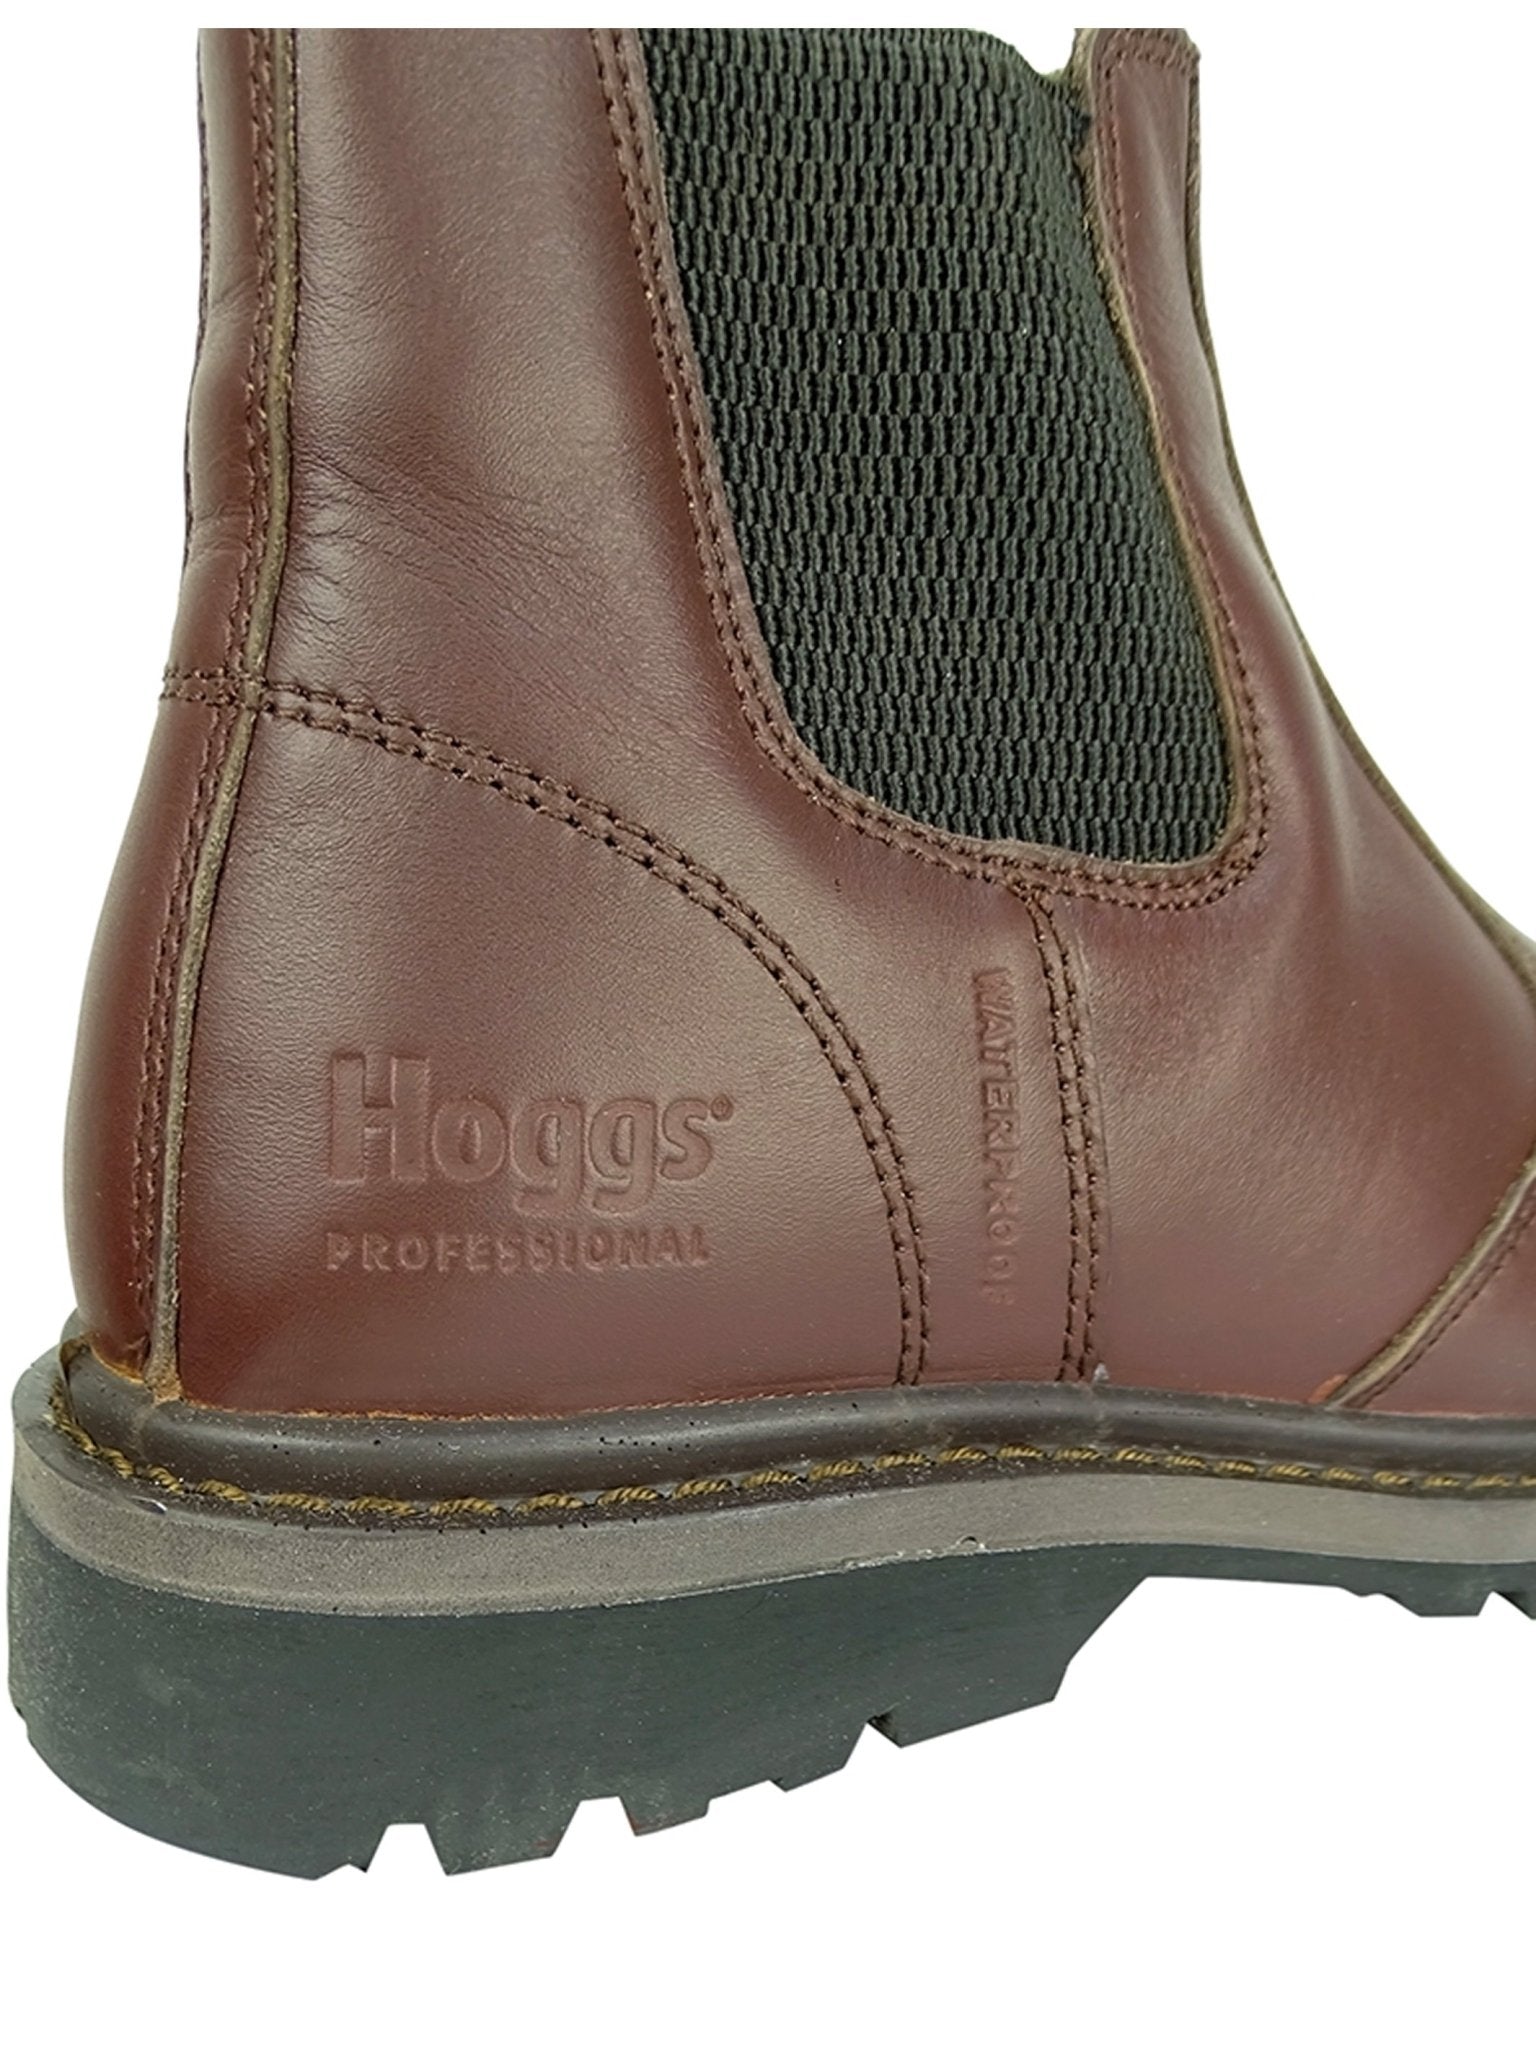 4elementsclothingHoggs of FifeHoggs of Fife - Zeus Waterproof Safety Chelsea Boots - Waterproof Dealer Safety BootsBootsZEUS/BR/40